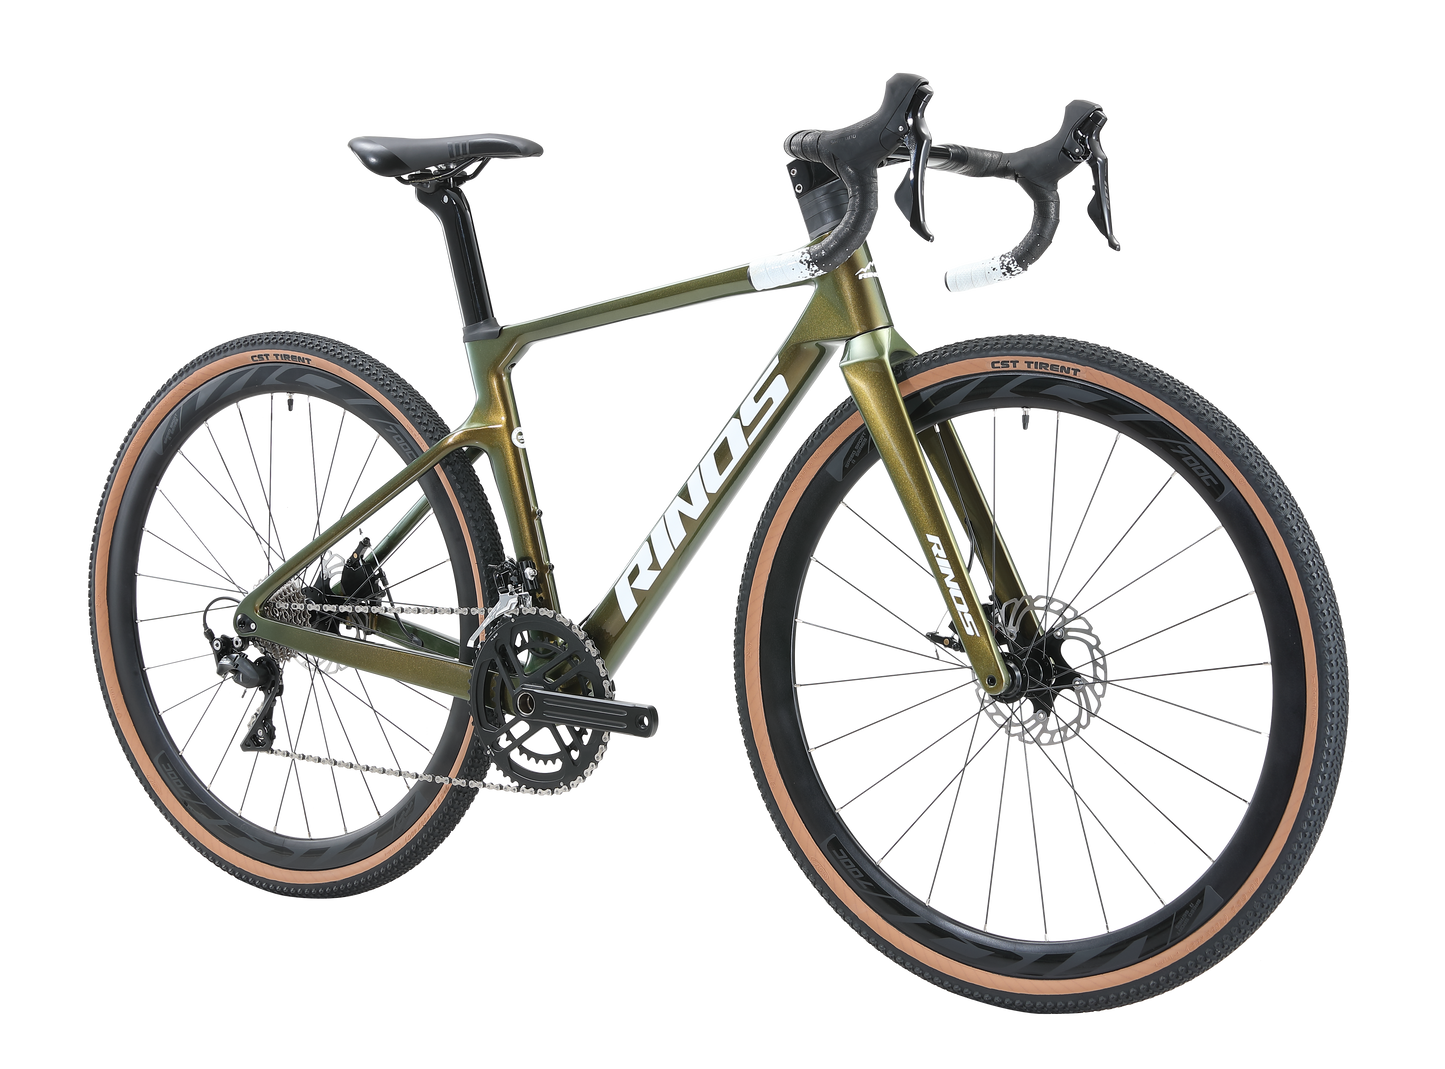 RINOS Carbon Gravel Bike Sandman1.0 Shimano R3000